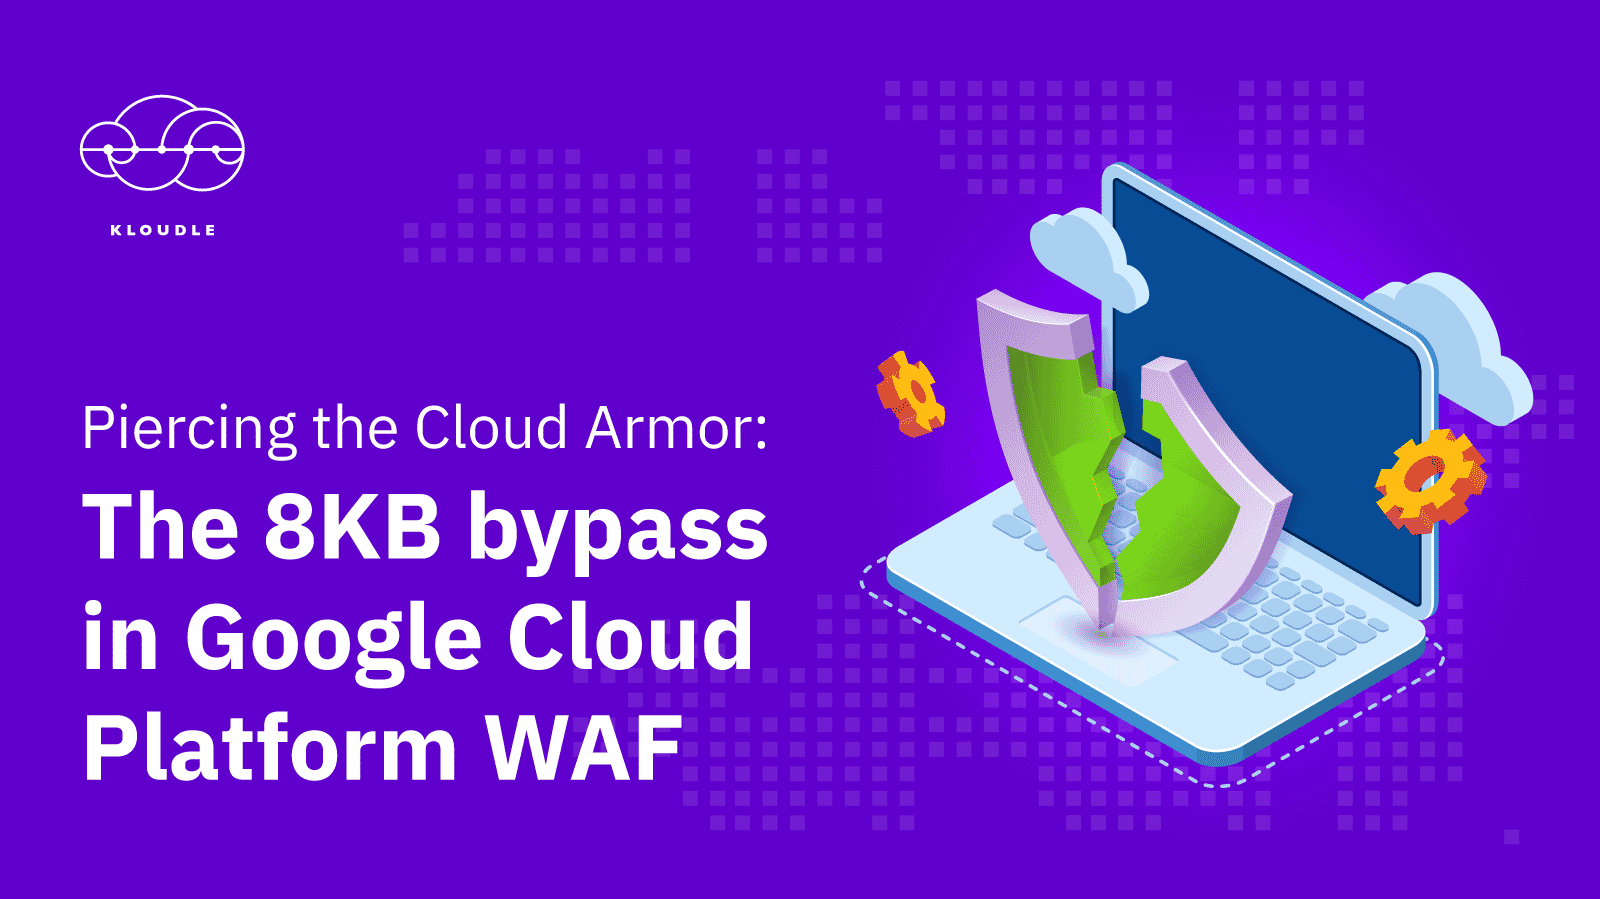 The 8KB bypass in Google Cloud Platform WAF